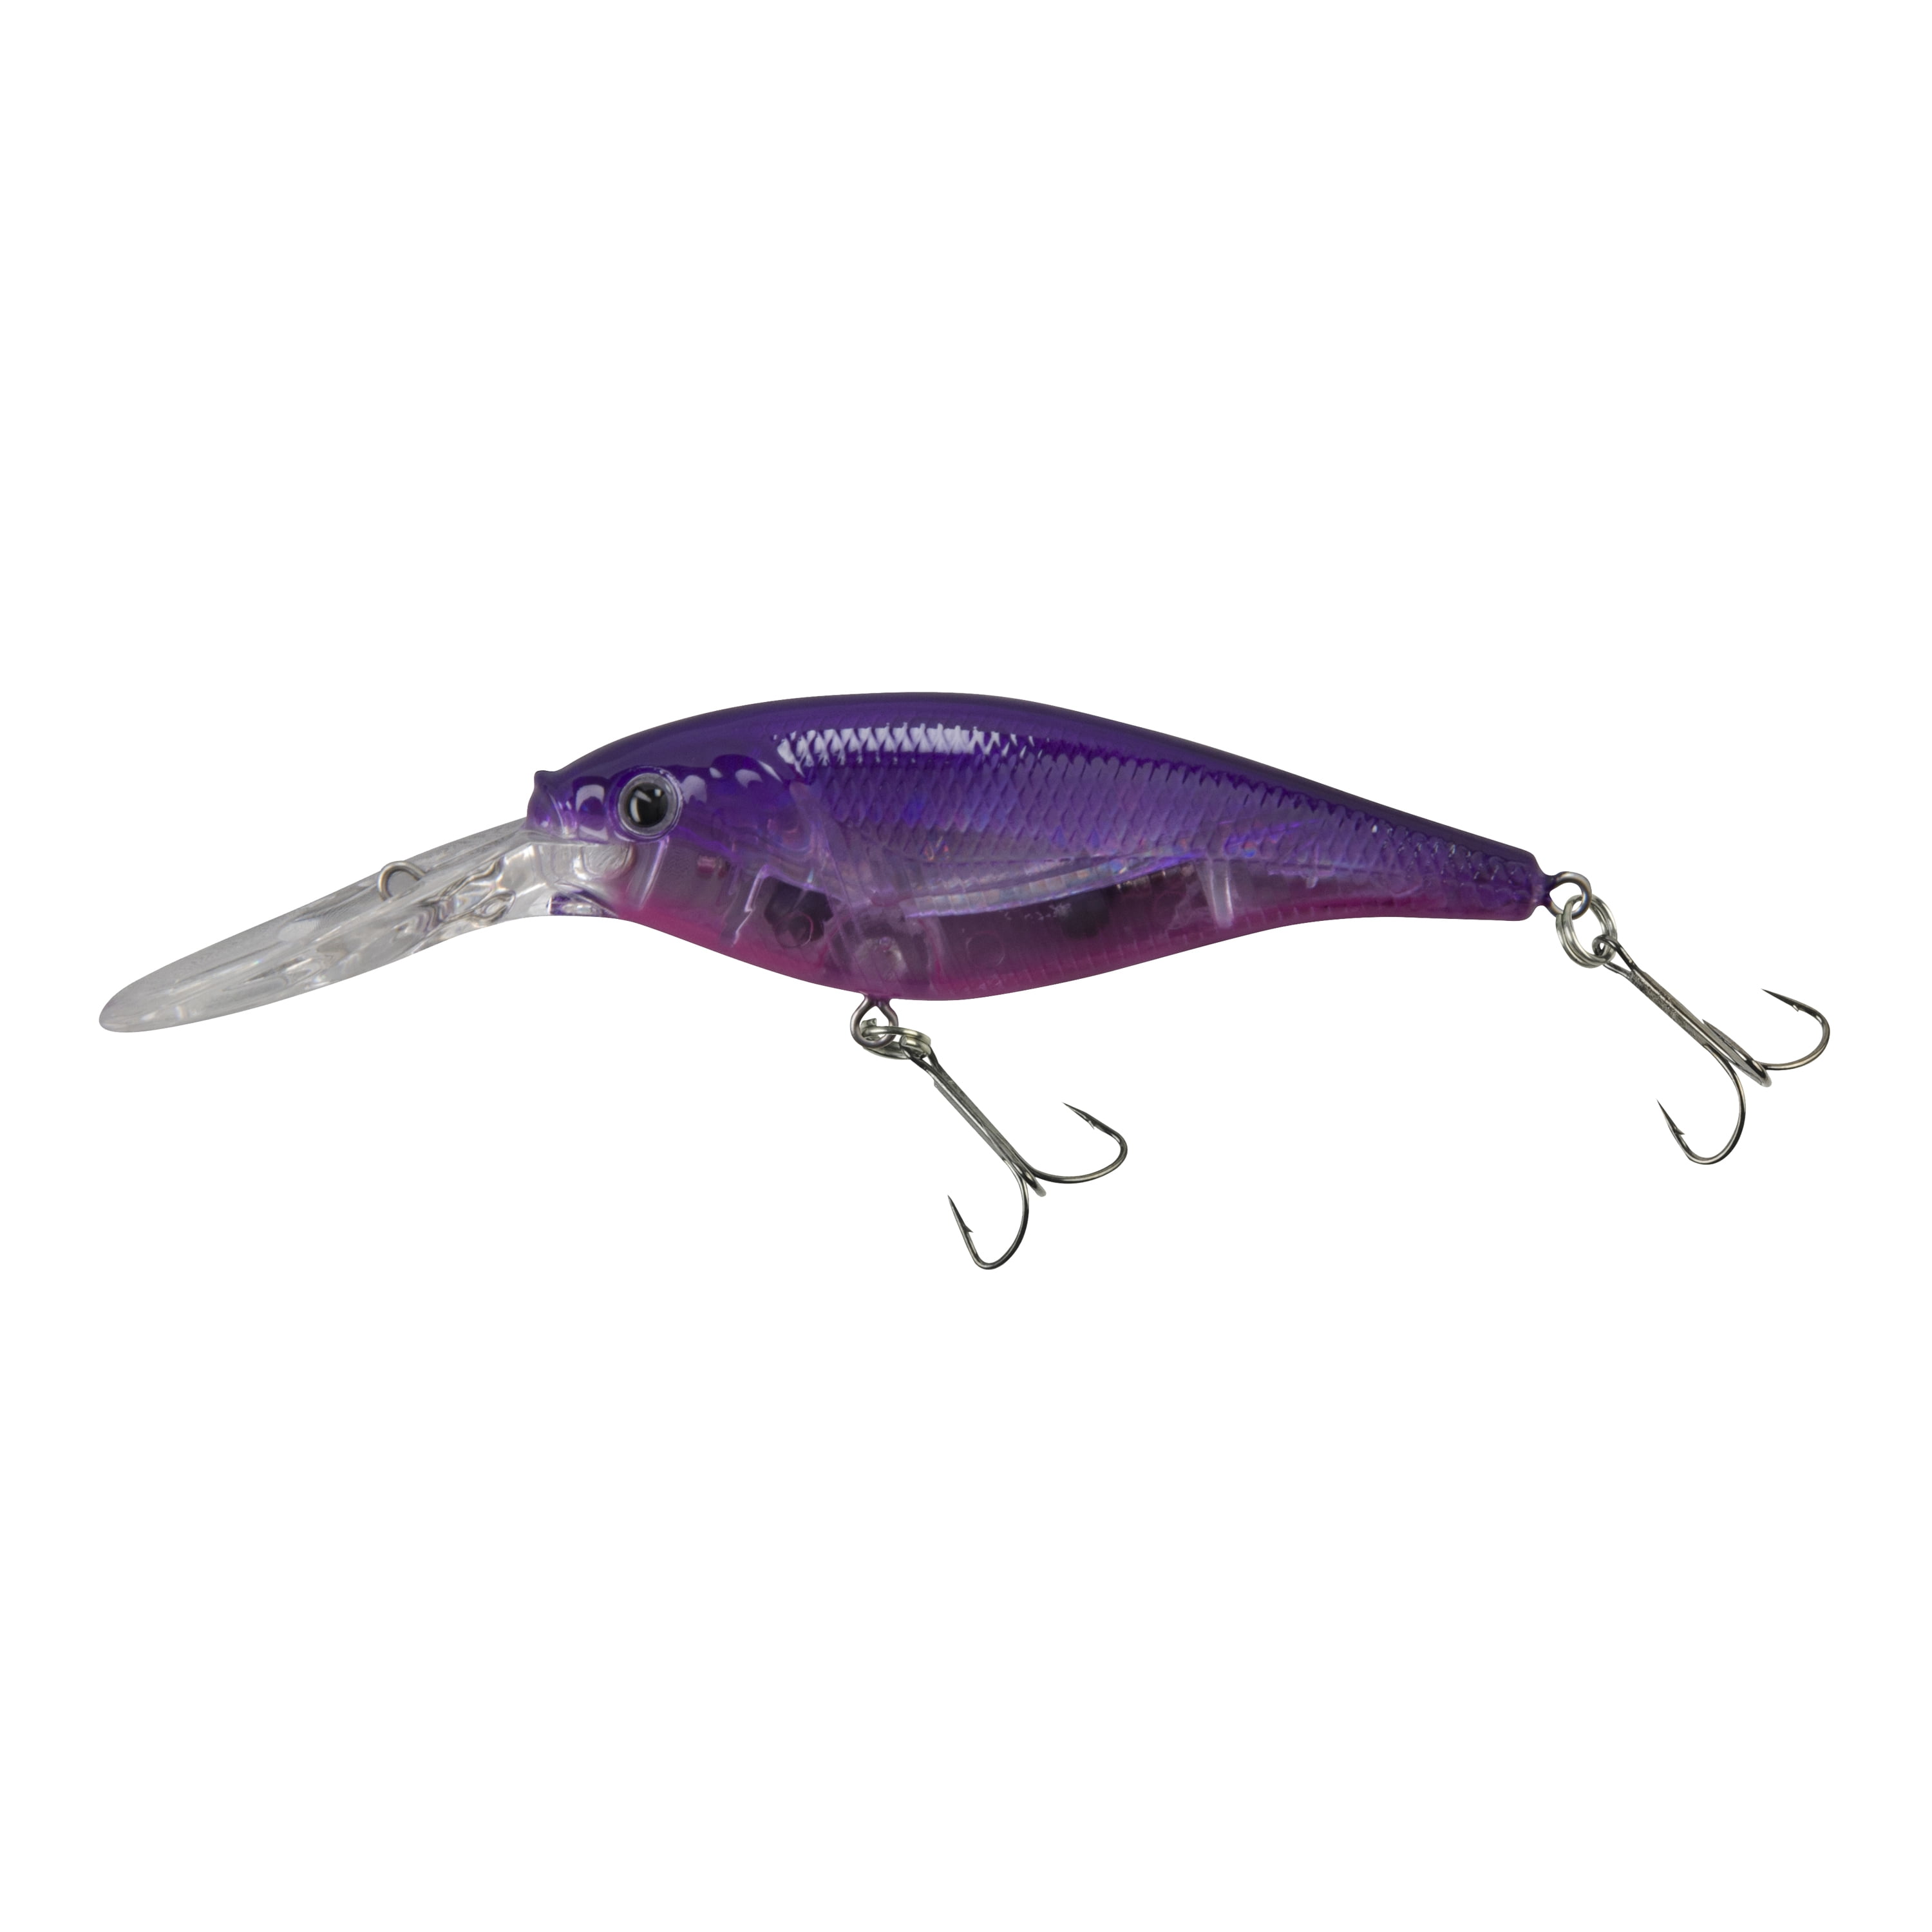 Berkley Flicker Shad Fishing Lure, Flashy Purple Candy, 5/16 oz